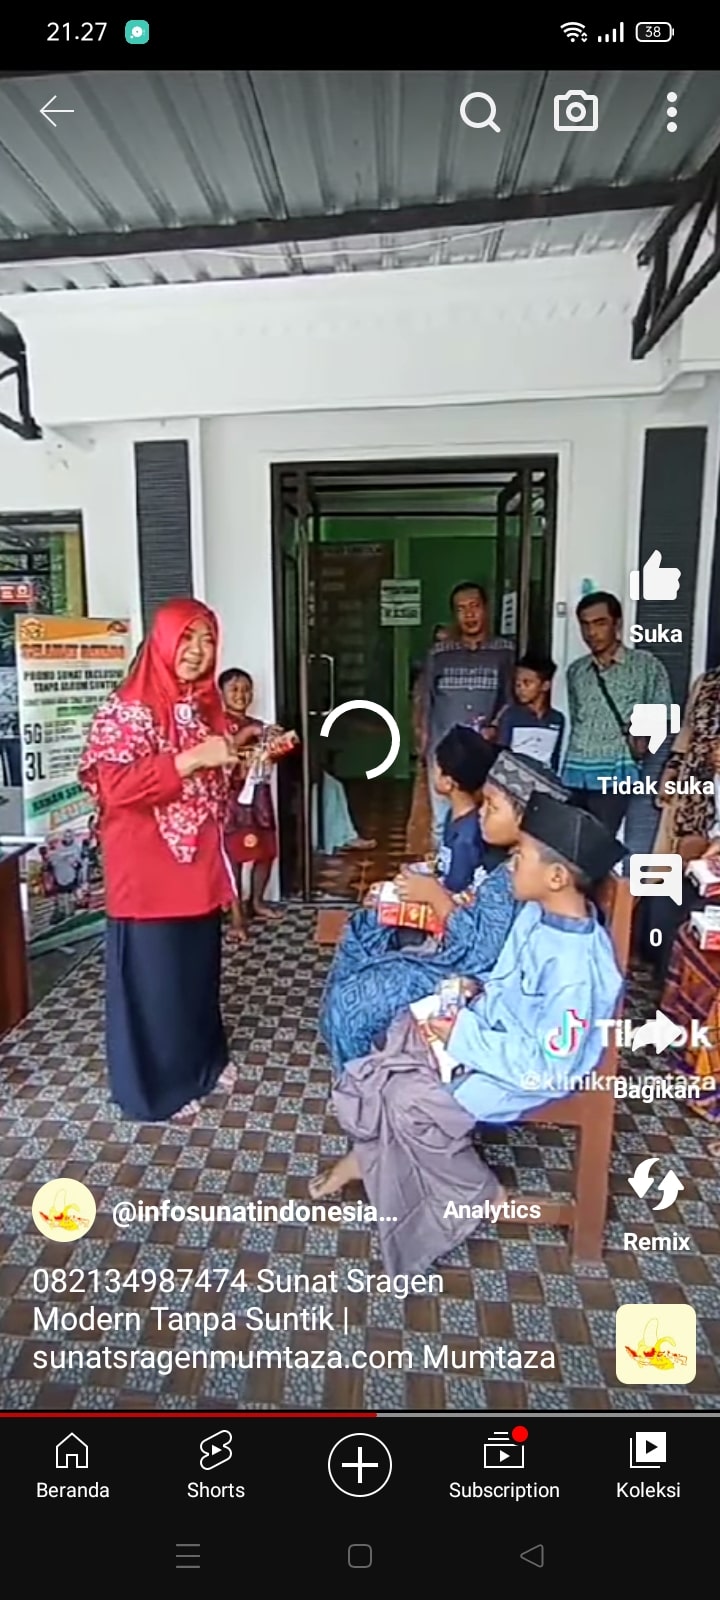 Gak Harus Libur Bisa Sunat Untuk Anak KarangSragen Desa Saradan Hubungi Sunat Sragen Mumtaza Murah dan Unggul